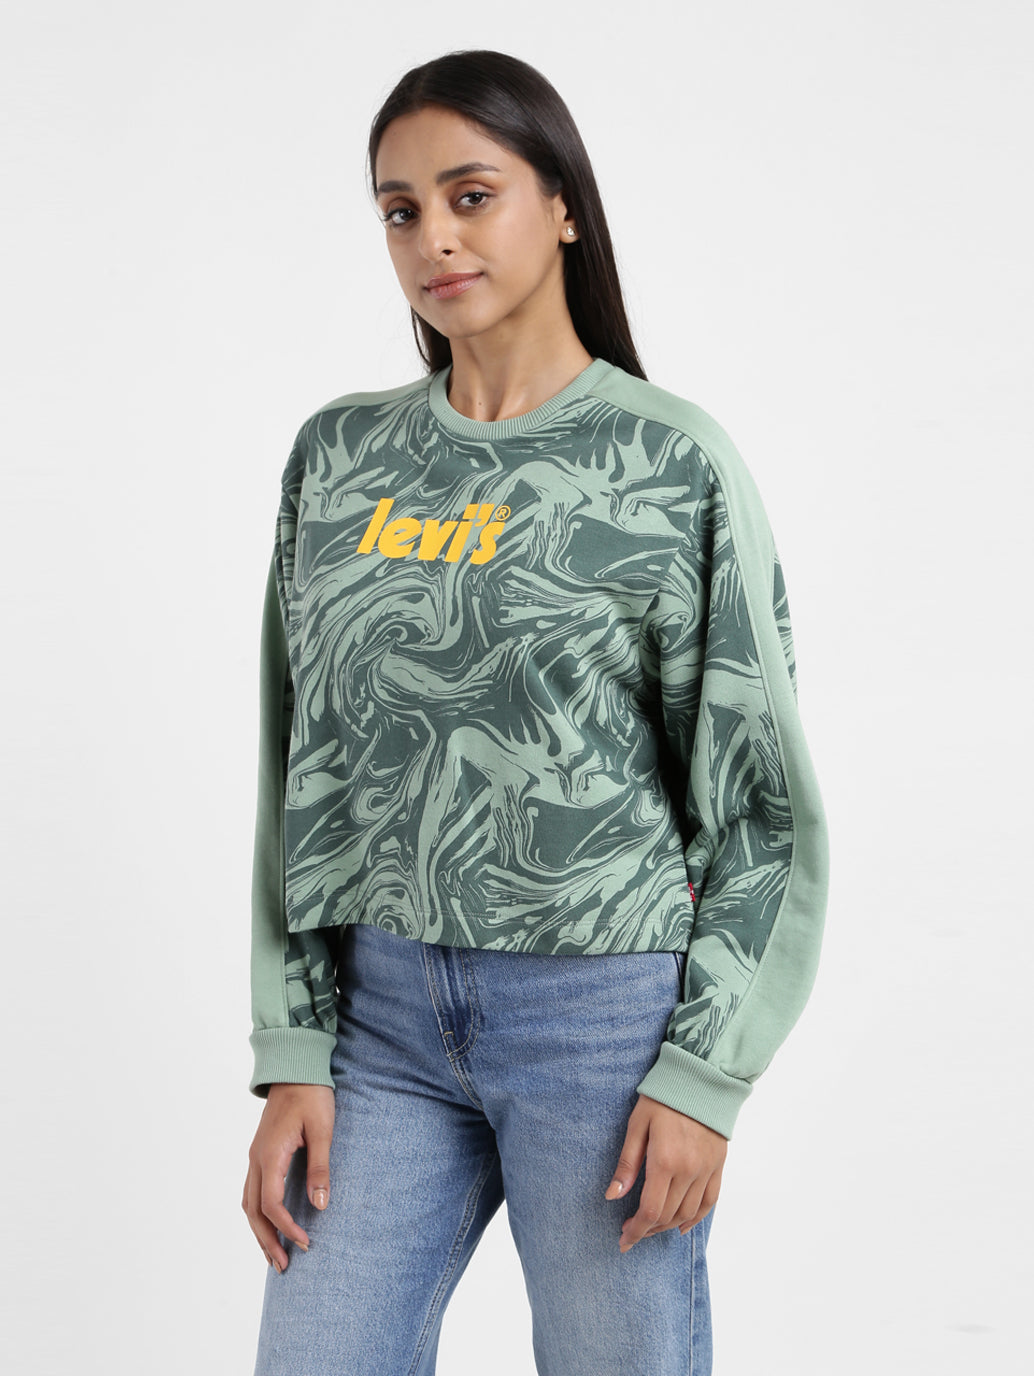 Levis Womens Sweatshirt Crew Neck Long Sleeves Graphic Print Green